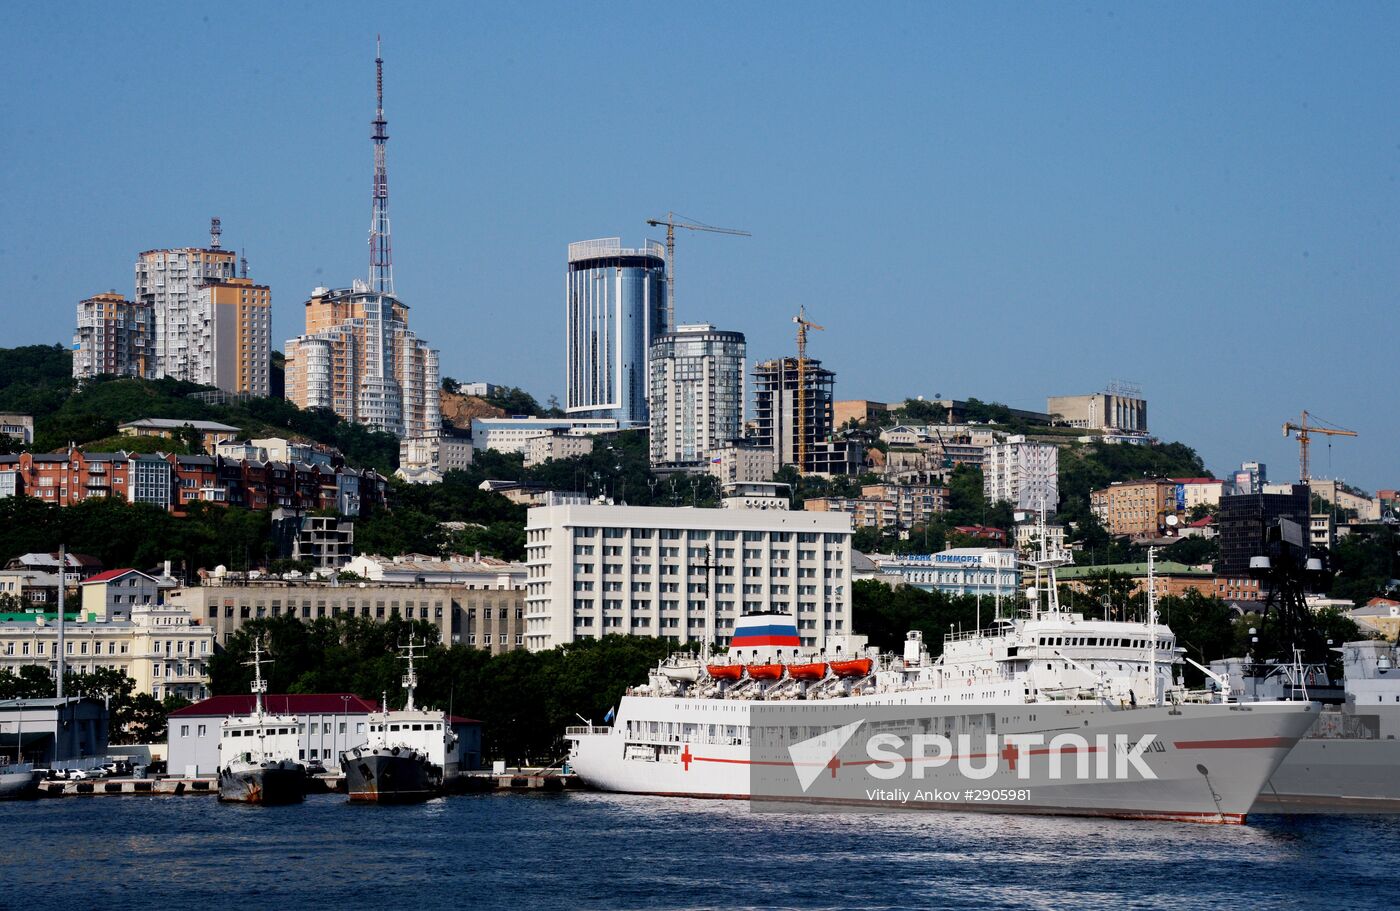 Cities of Russia. Vladivostok